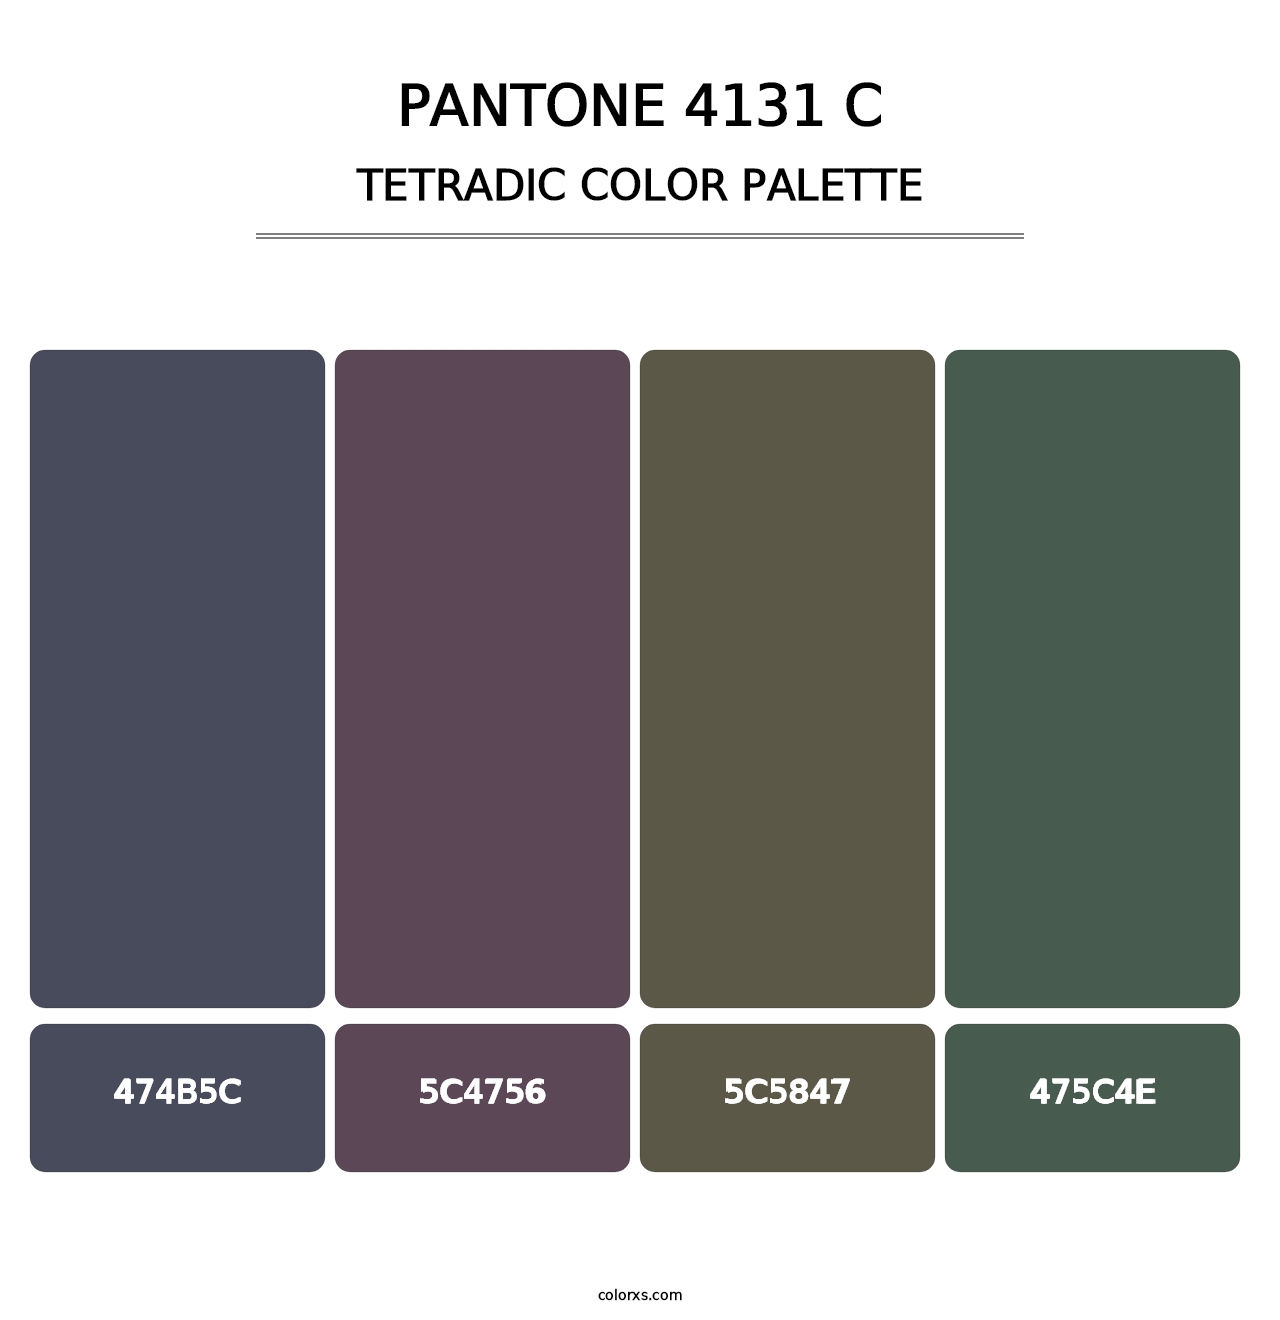 PANTONE 4131 C - Tetradic Color Palette